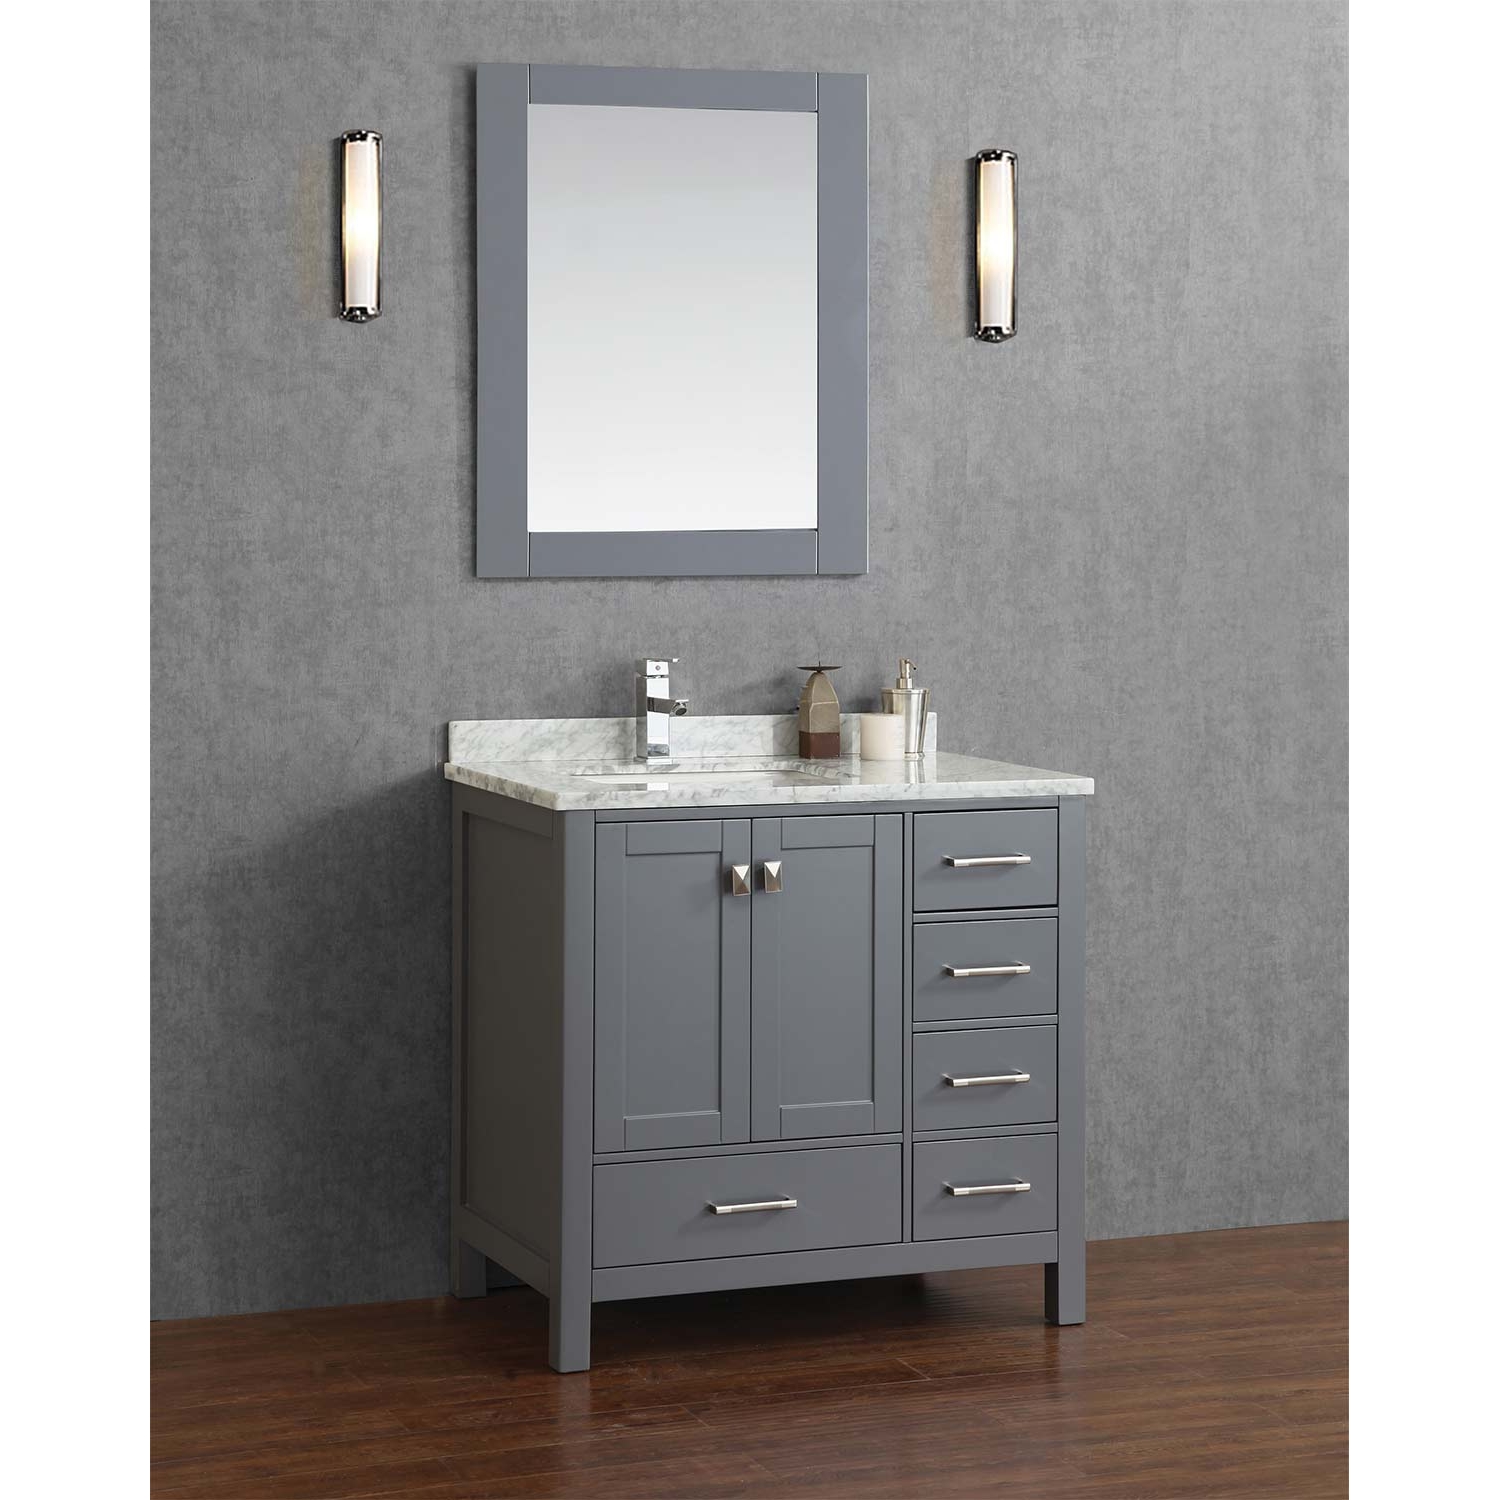 Buy Vincent 36 Inch Solid Wood Single Bathroom Vanity in Charcoal Grey ...